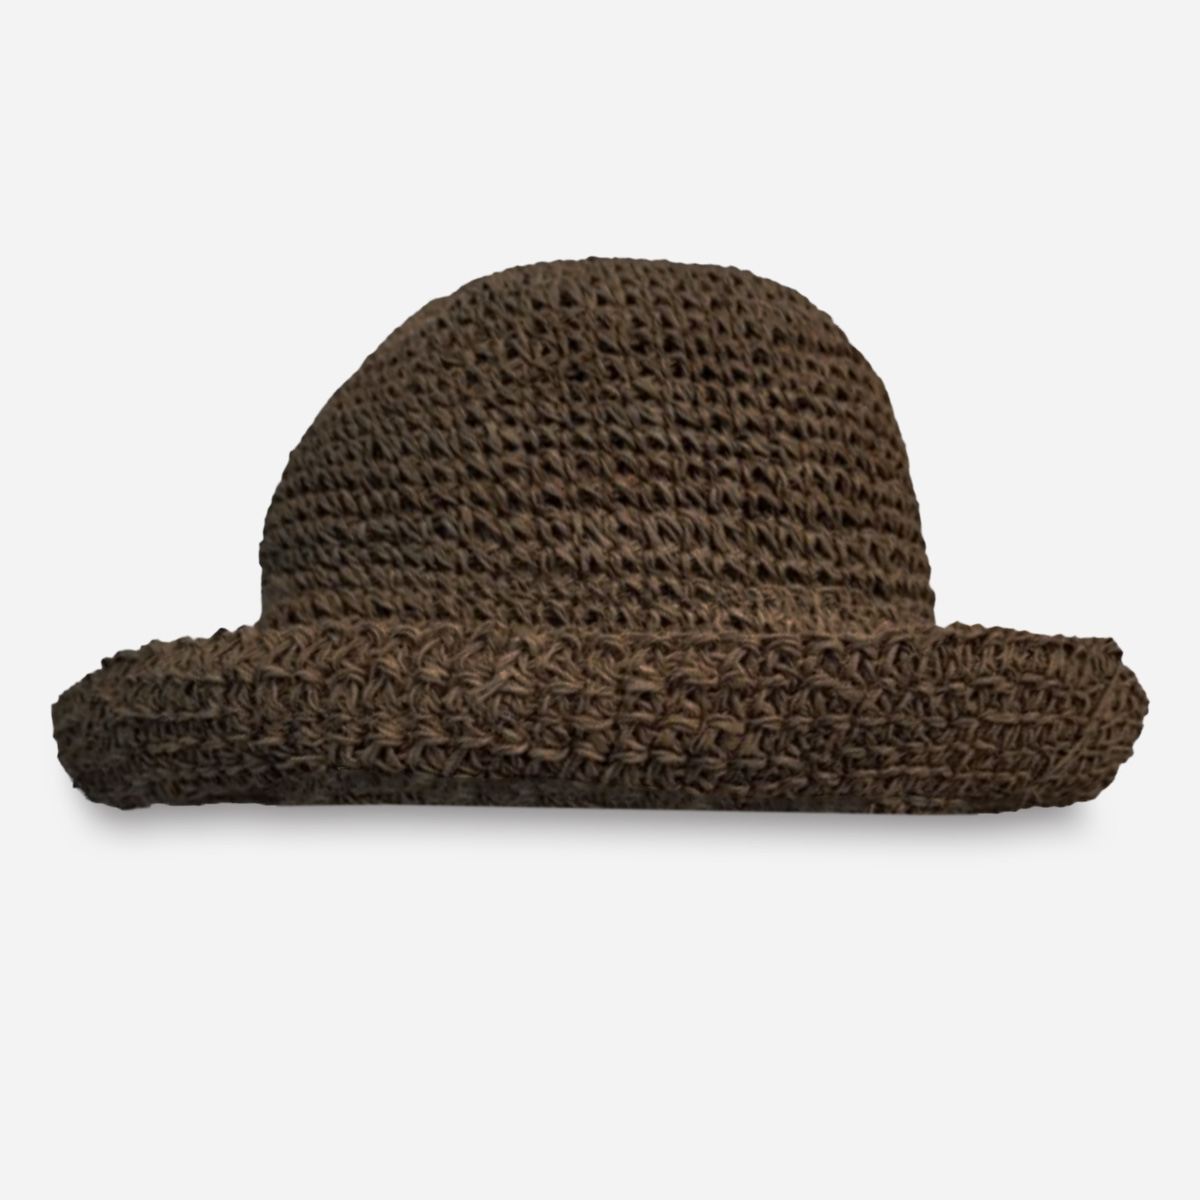 Chicos brown breton straw hat